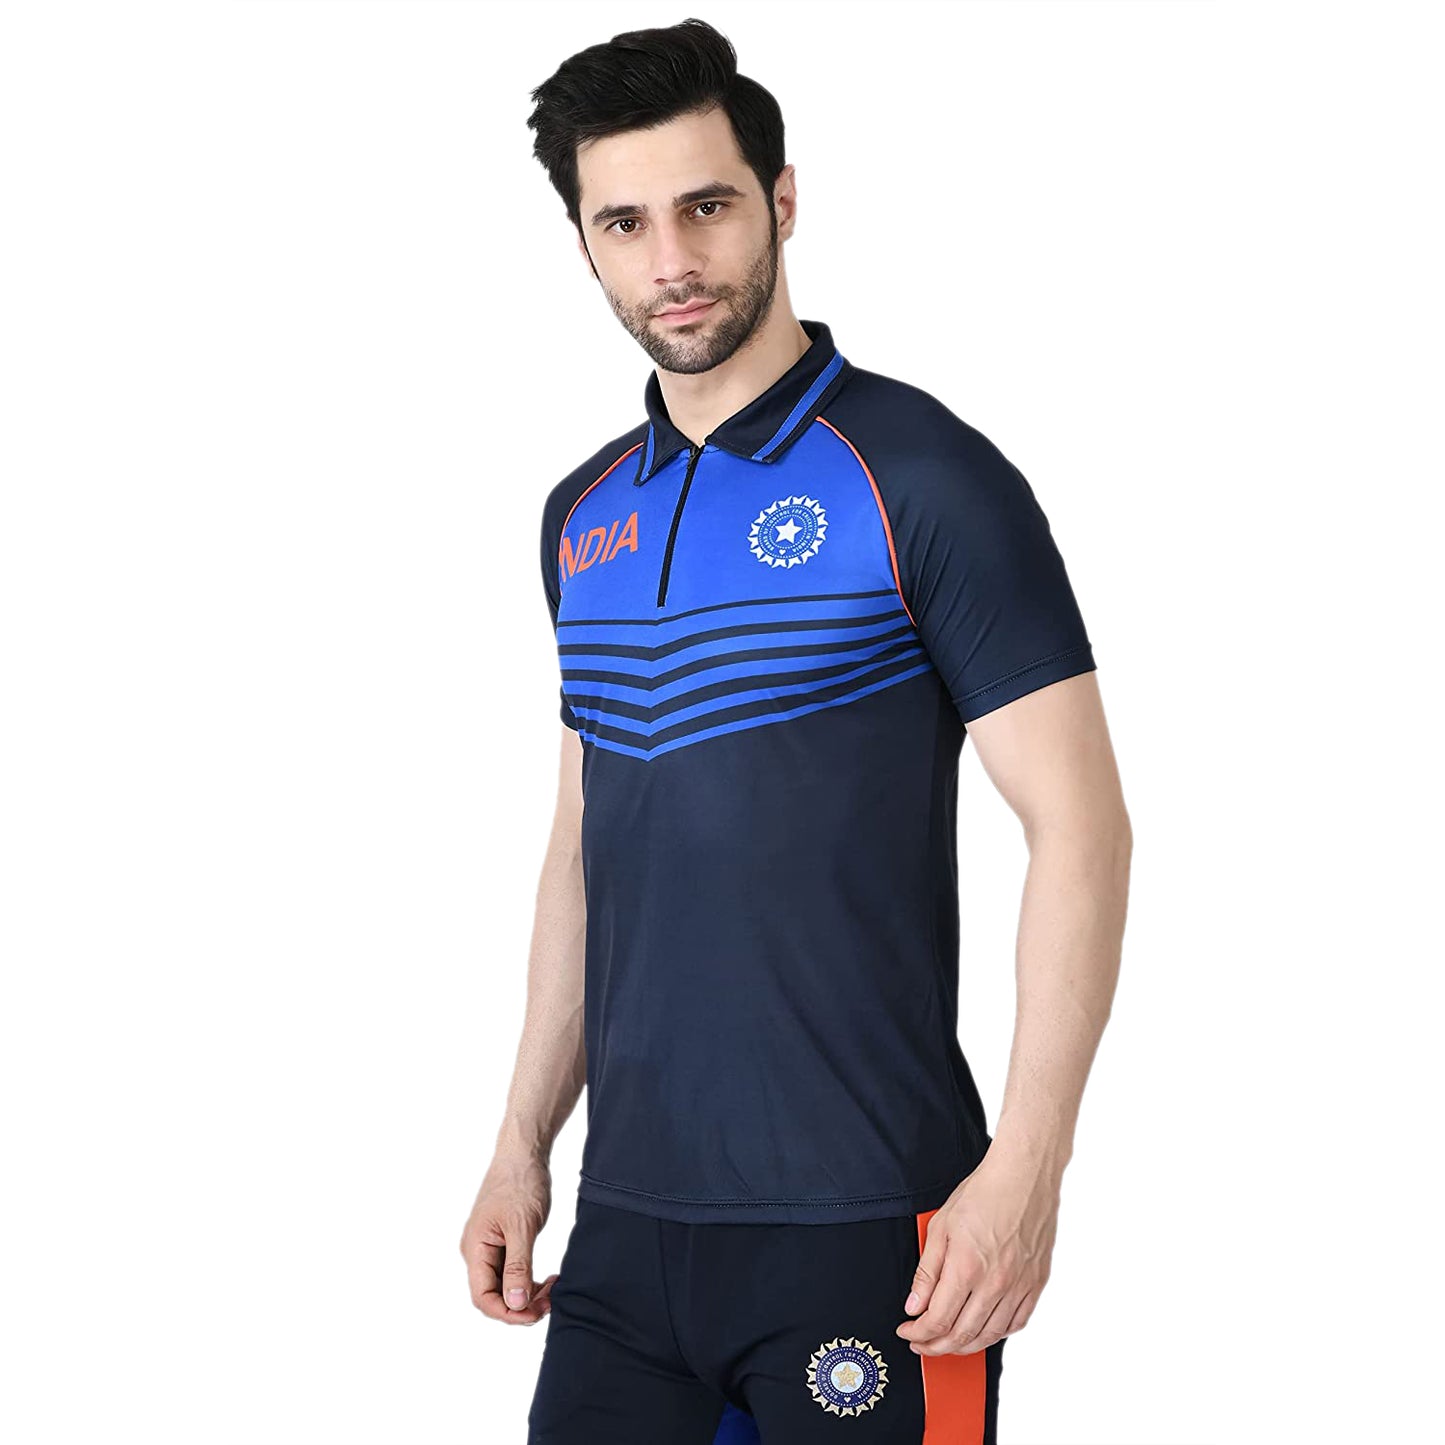 Playr Icc T20 Men's Regular Fit T-Shirt, Navy/Royal - Best Price online Prokicksports.com